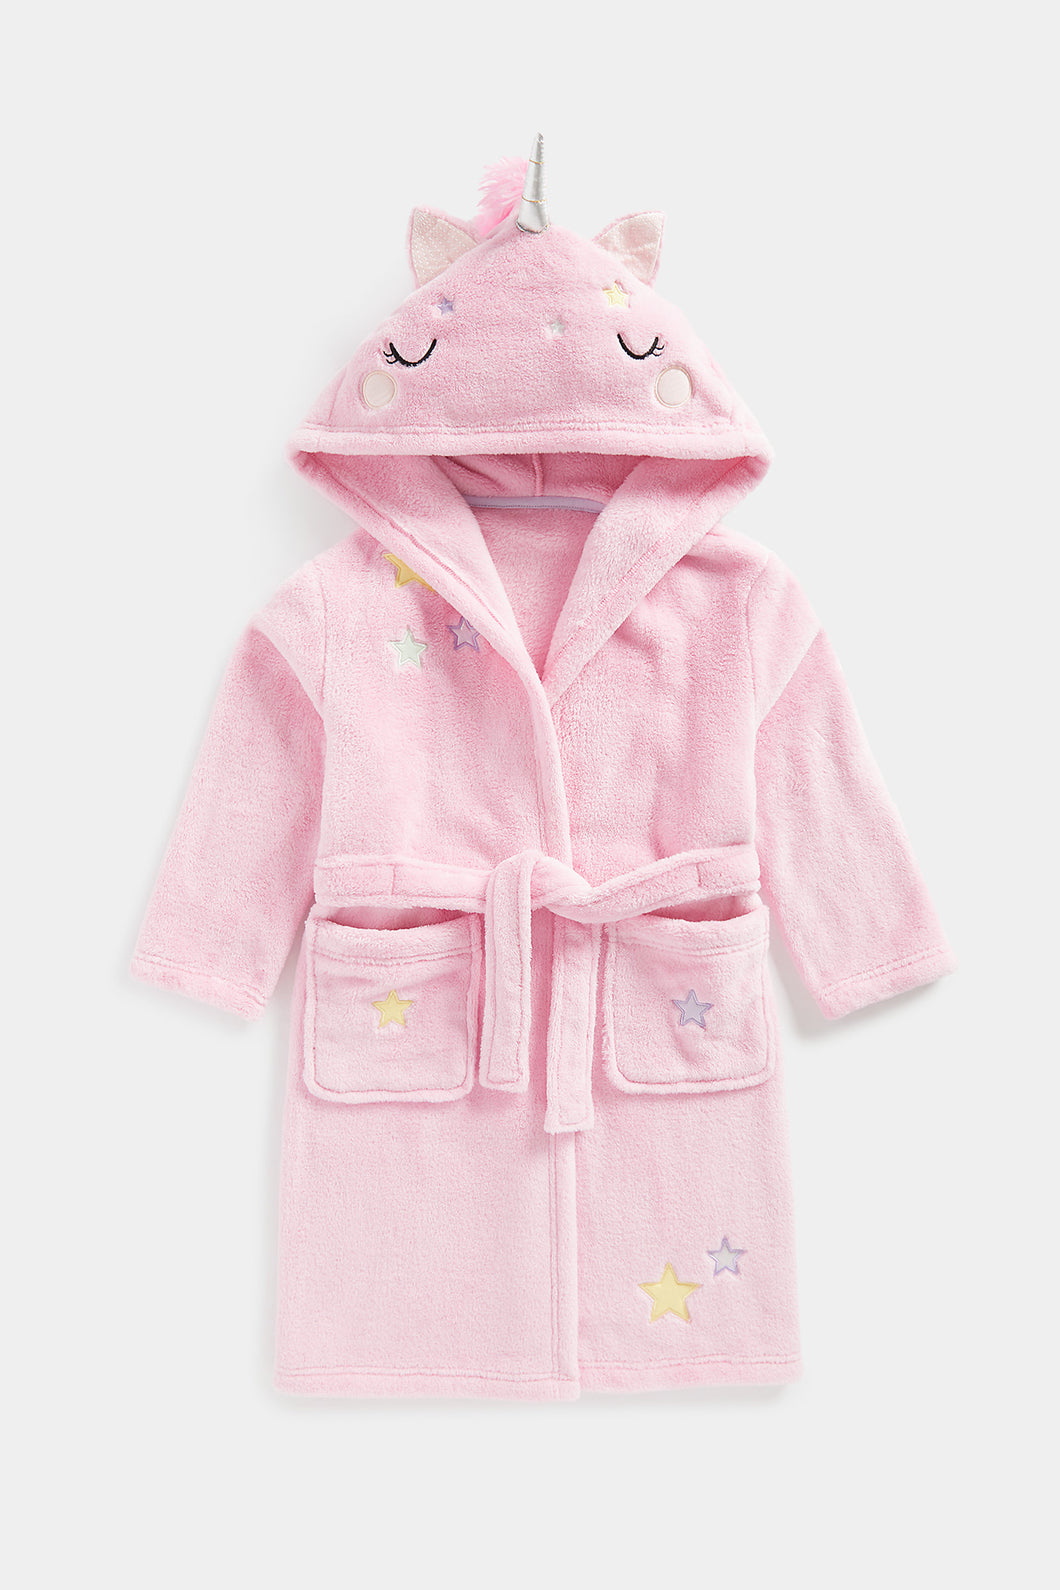 Mothercare Pink Unicorn Robe